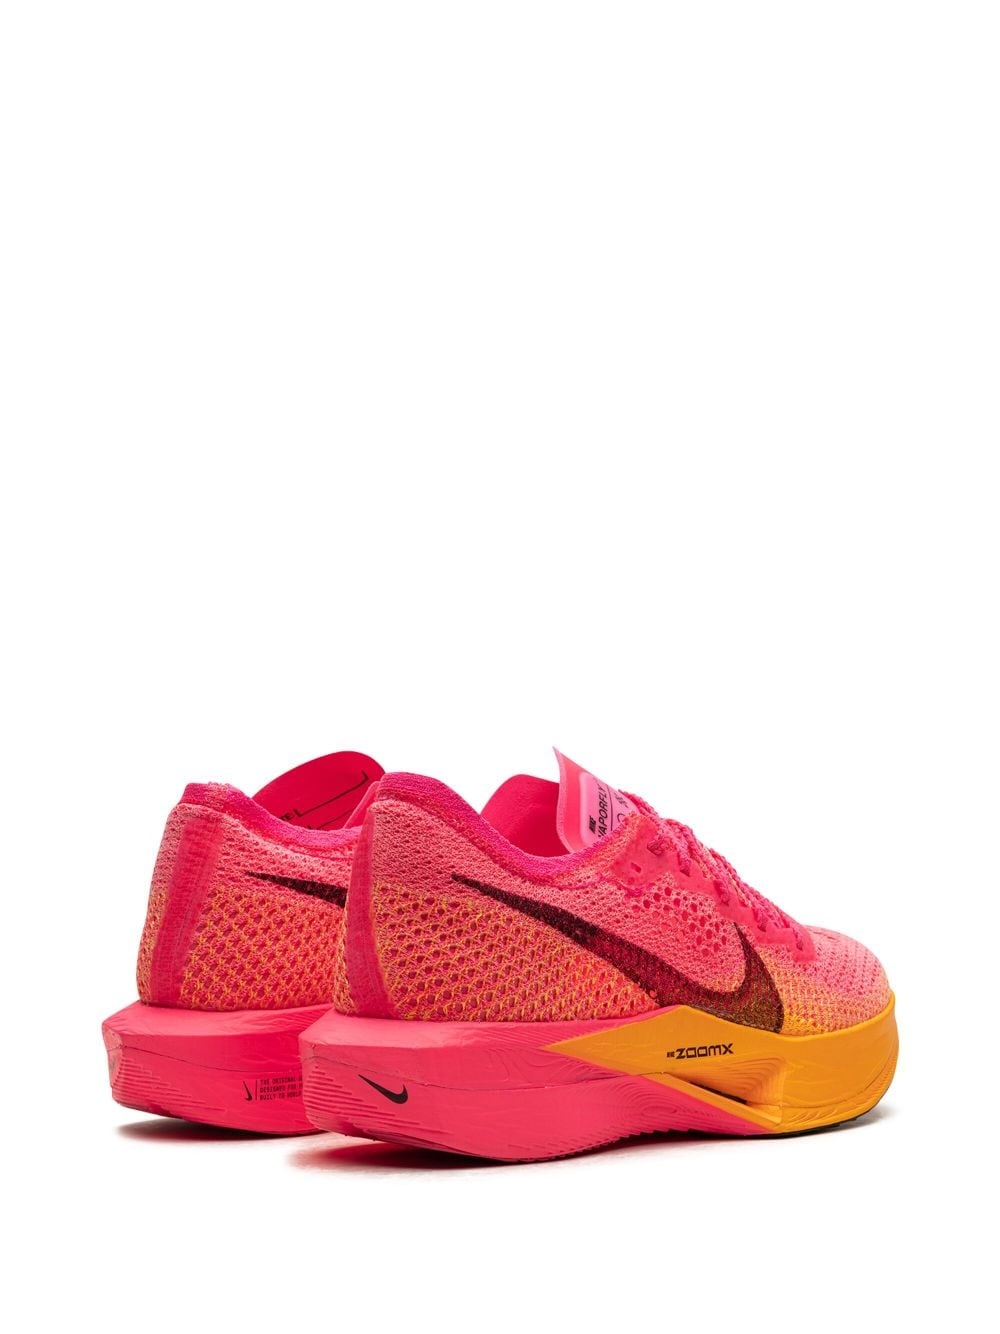 ZoomX Vaporfly Next% 3 "Hyper Pink/Laser Orange" sneakers - 3